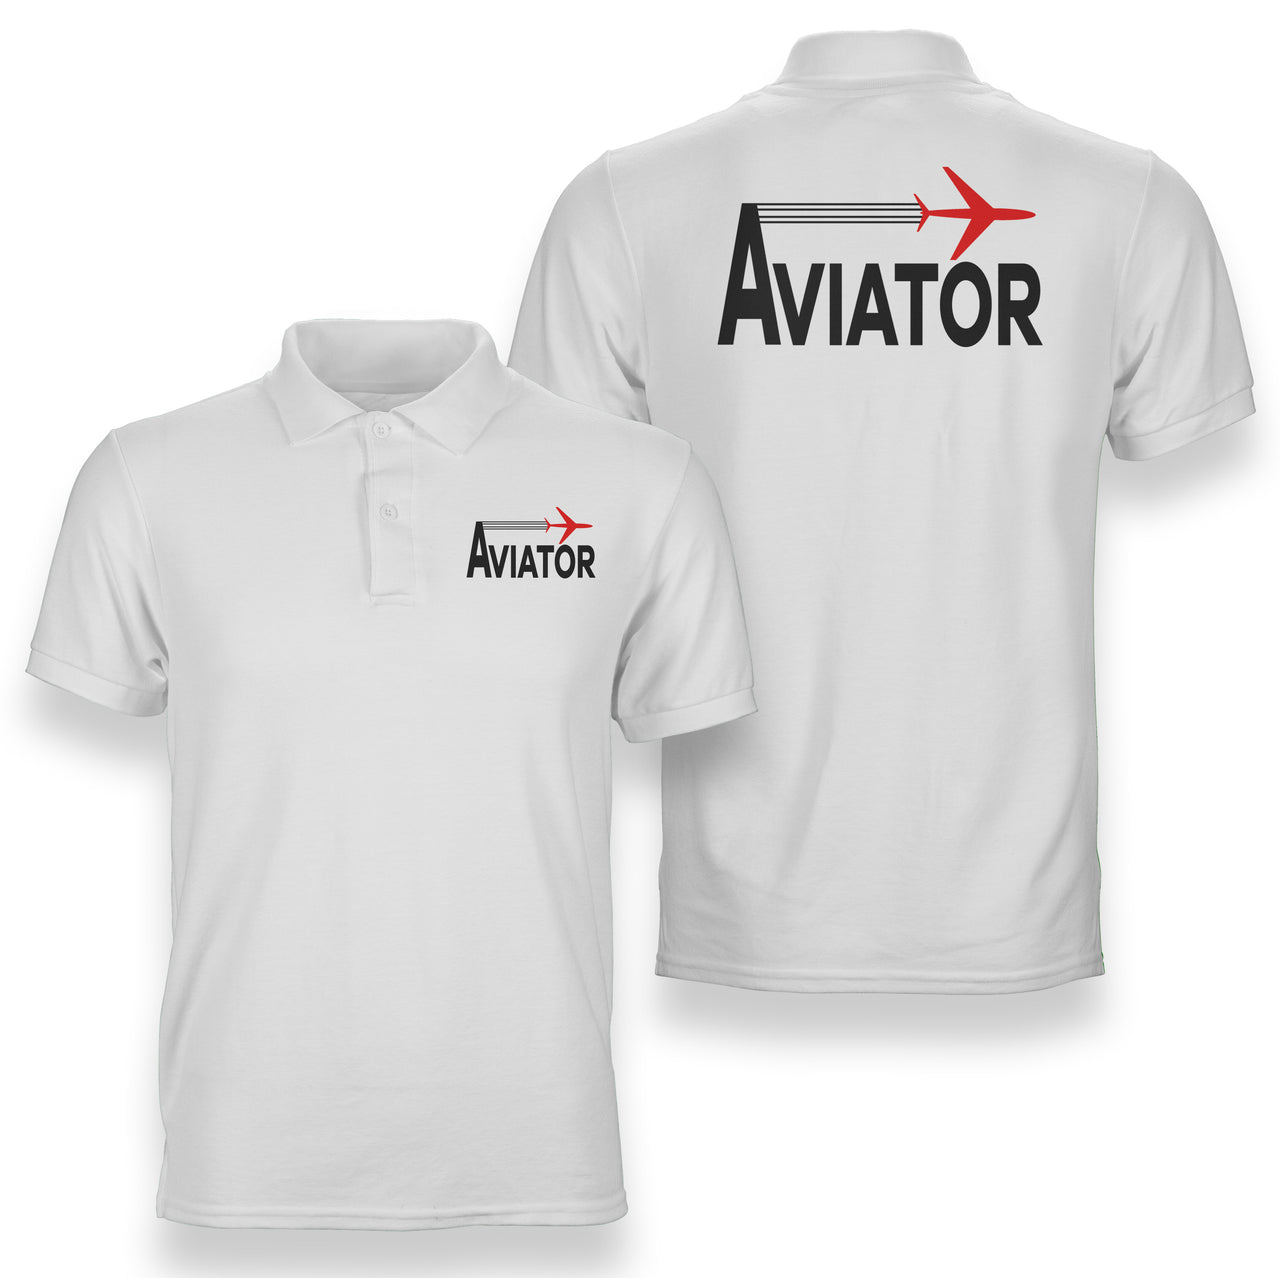 Aviator Designed Double Side Polo T-Shirts